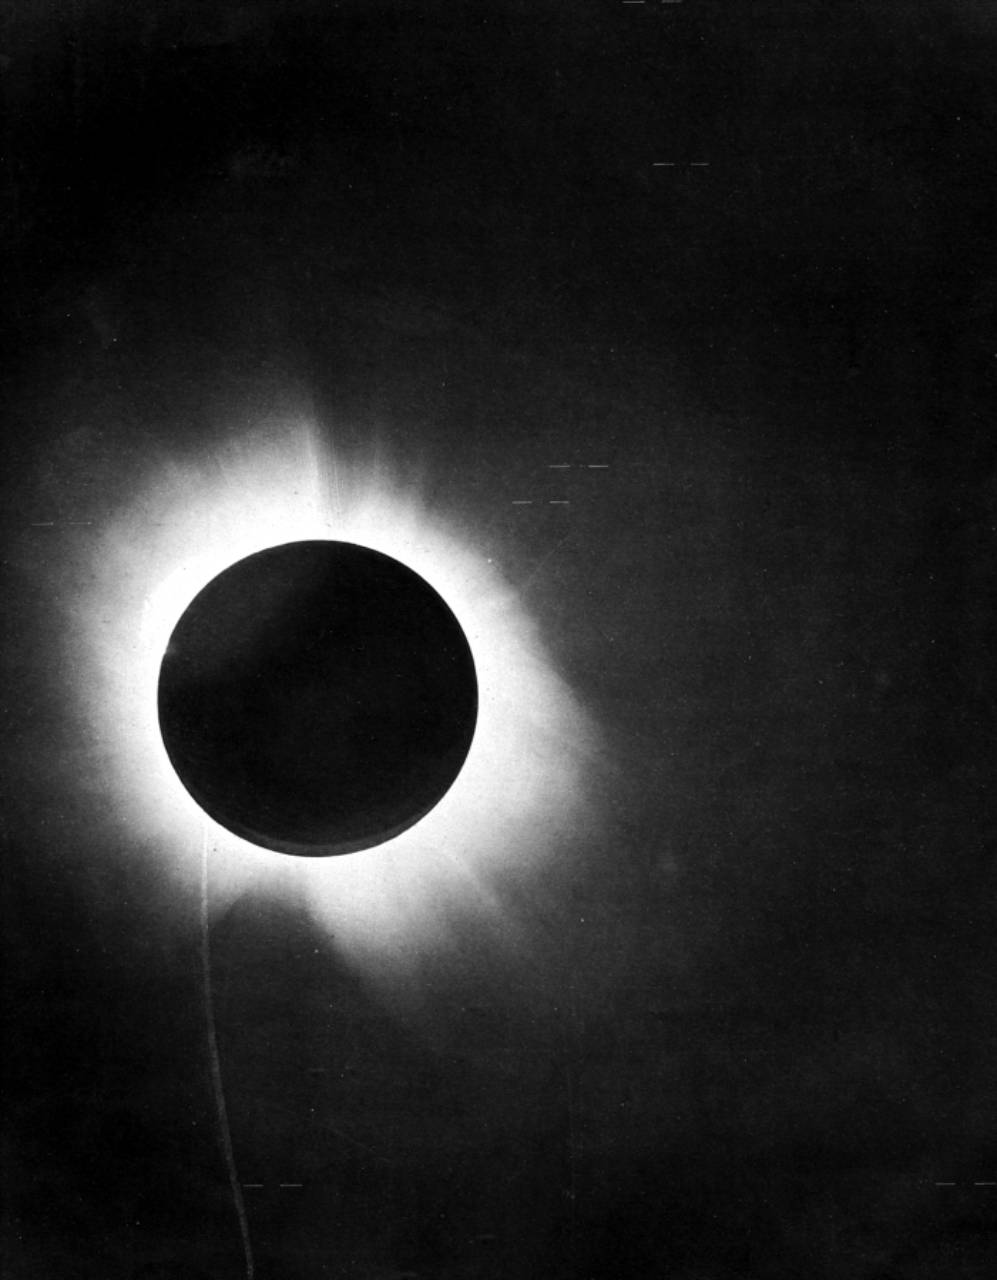 Eddington Plate of 1919 Eclipse